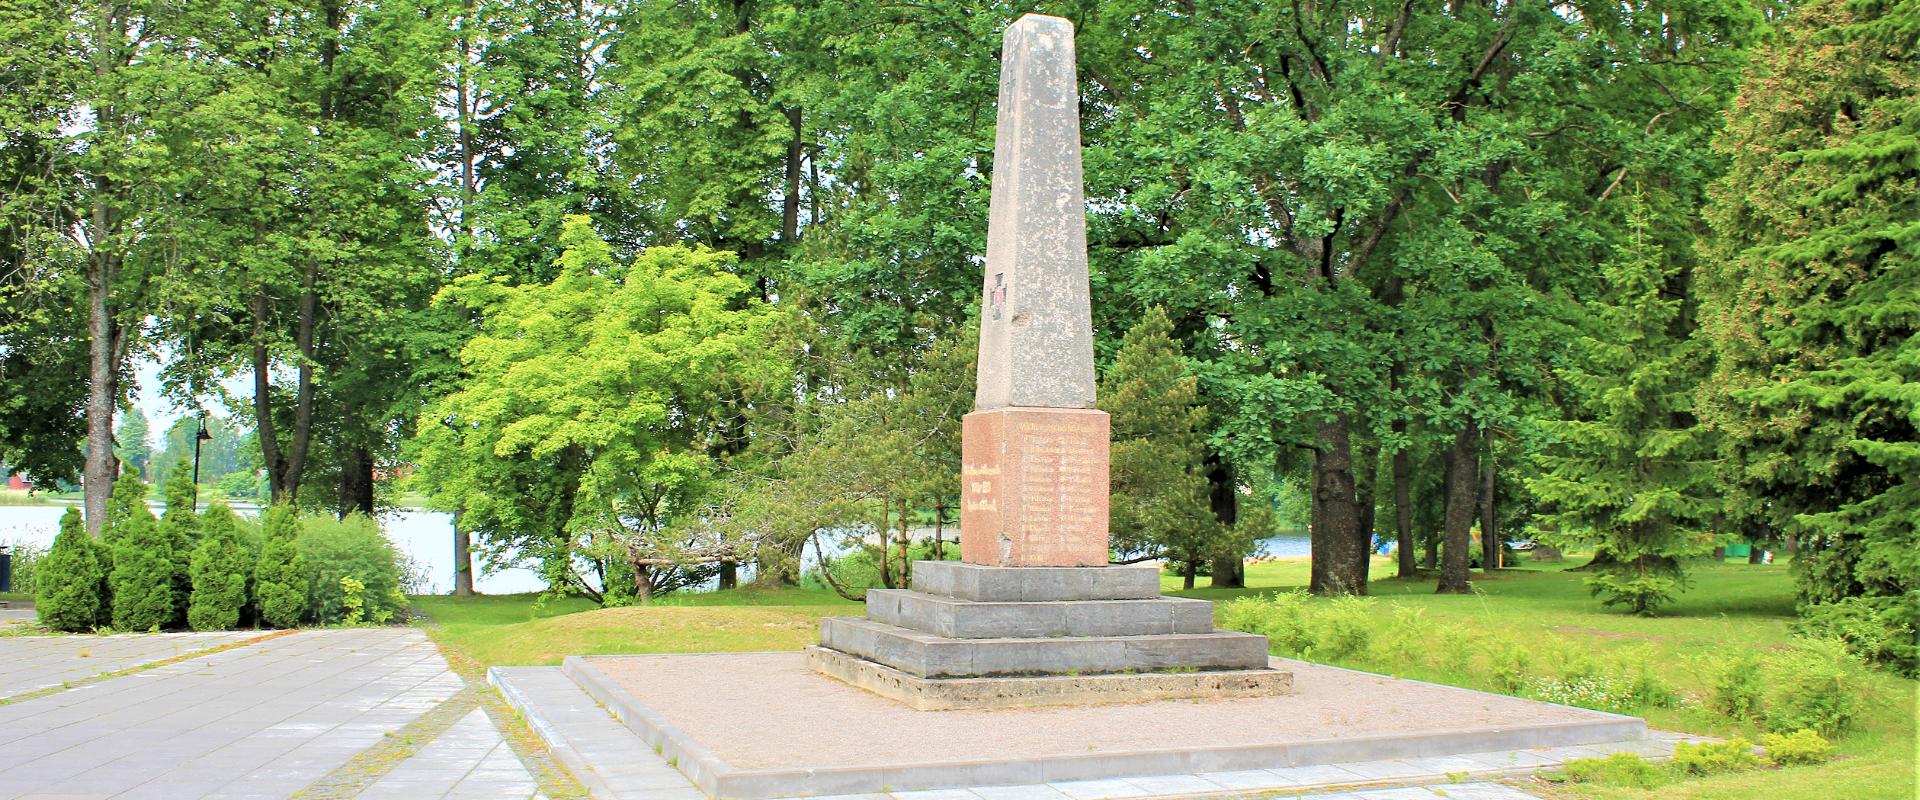 Monument Park (Ausamba park) in Räpina